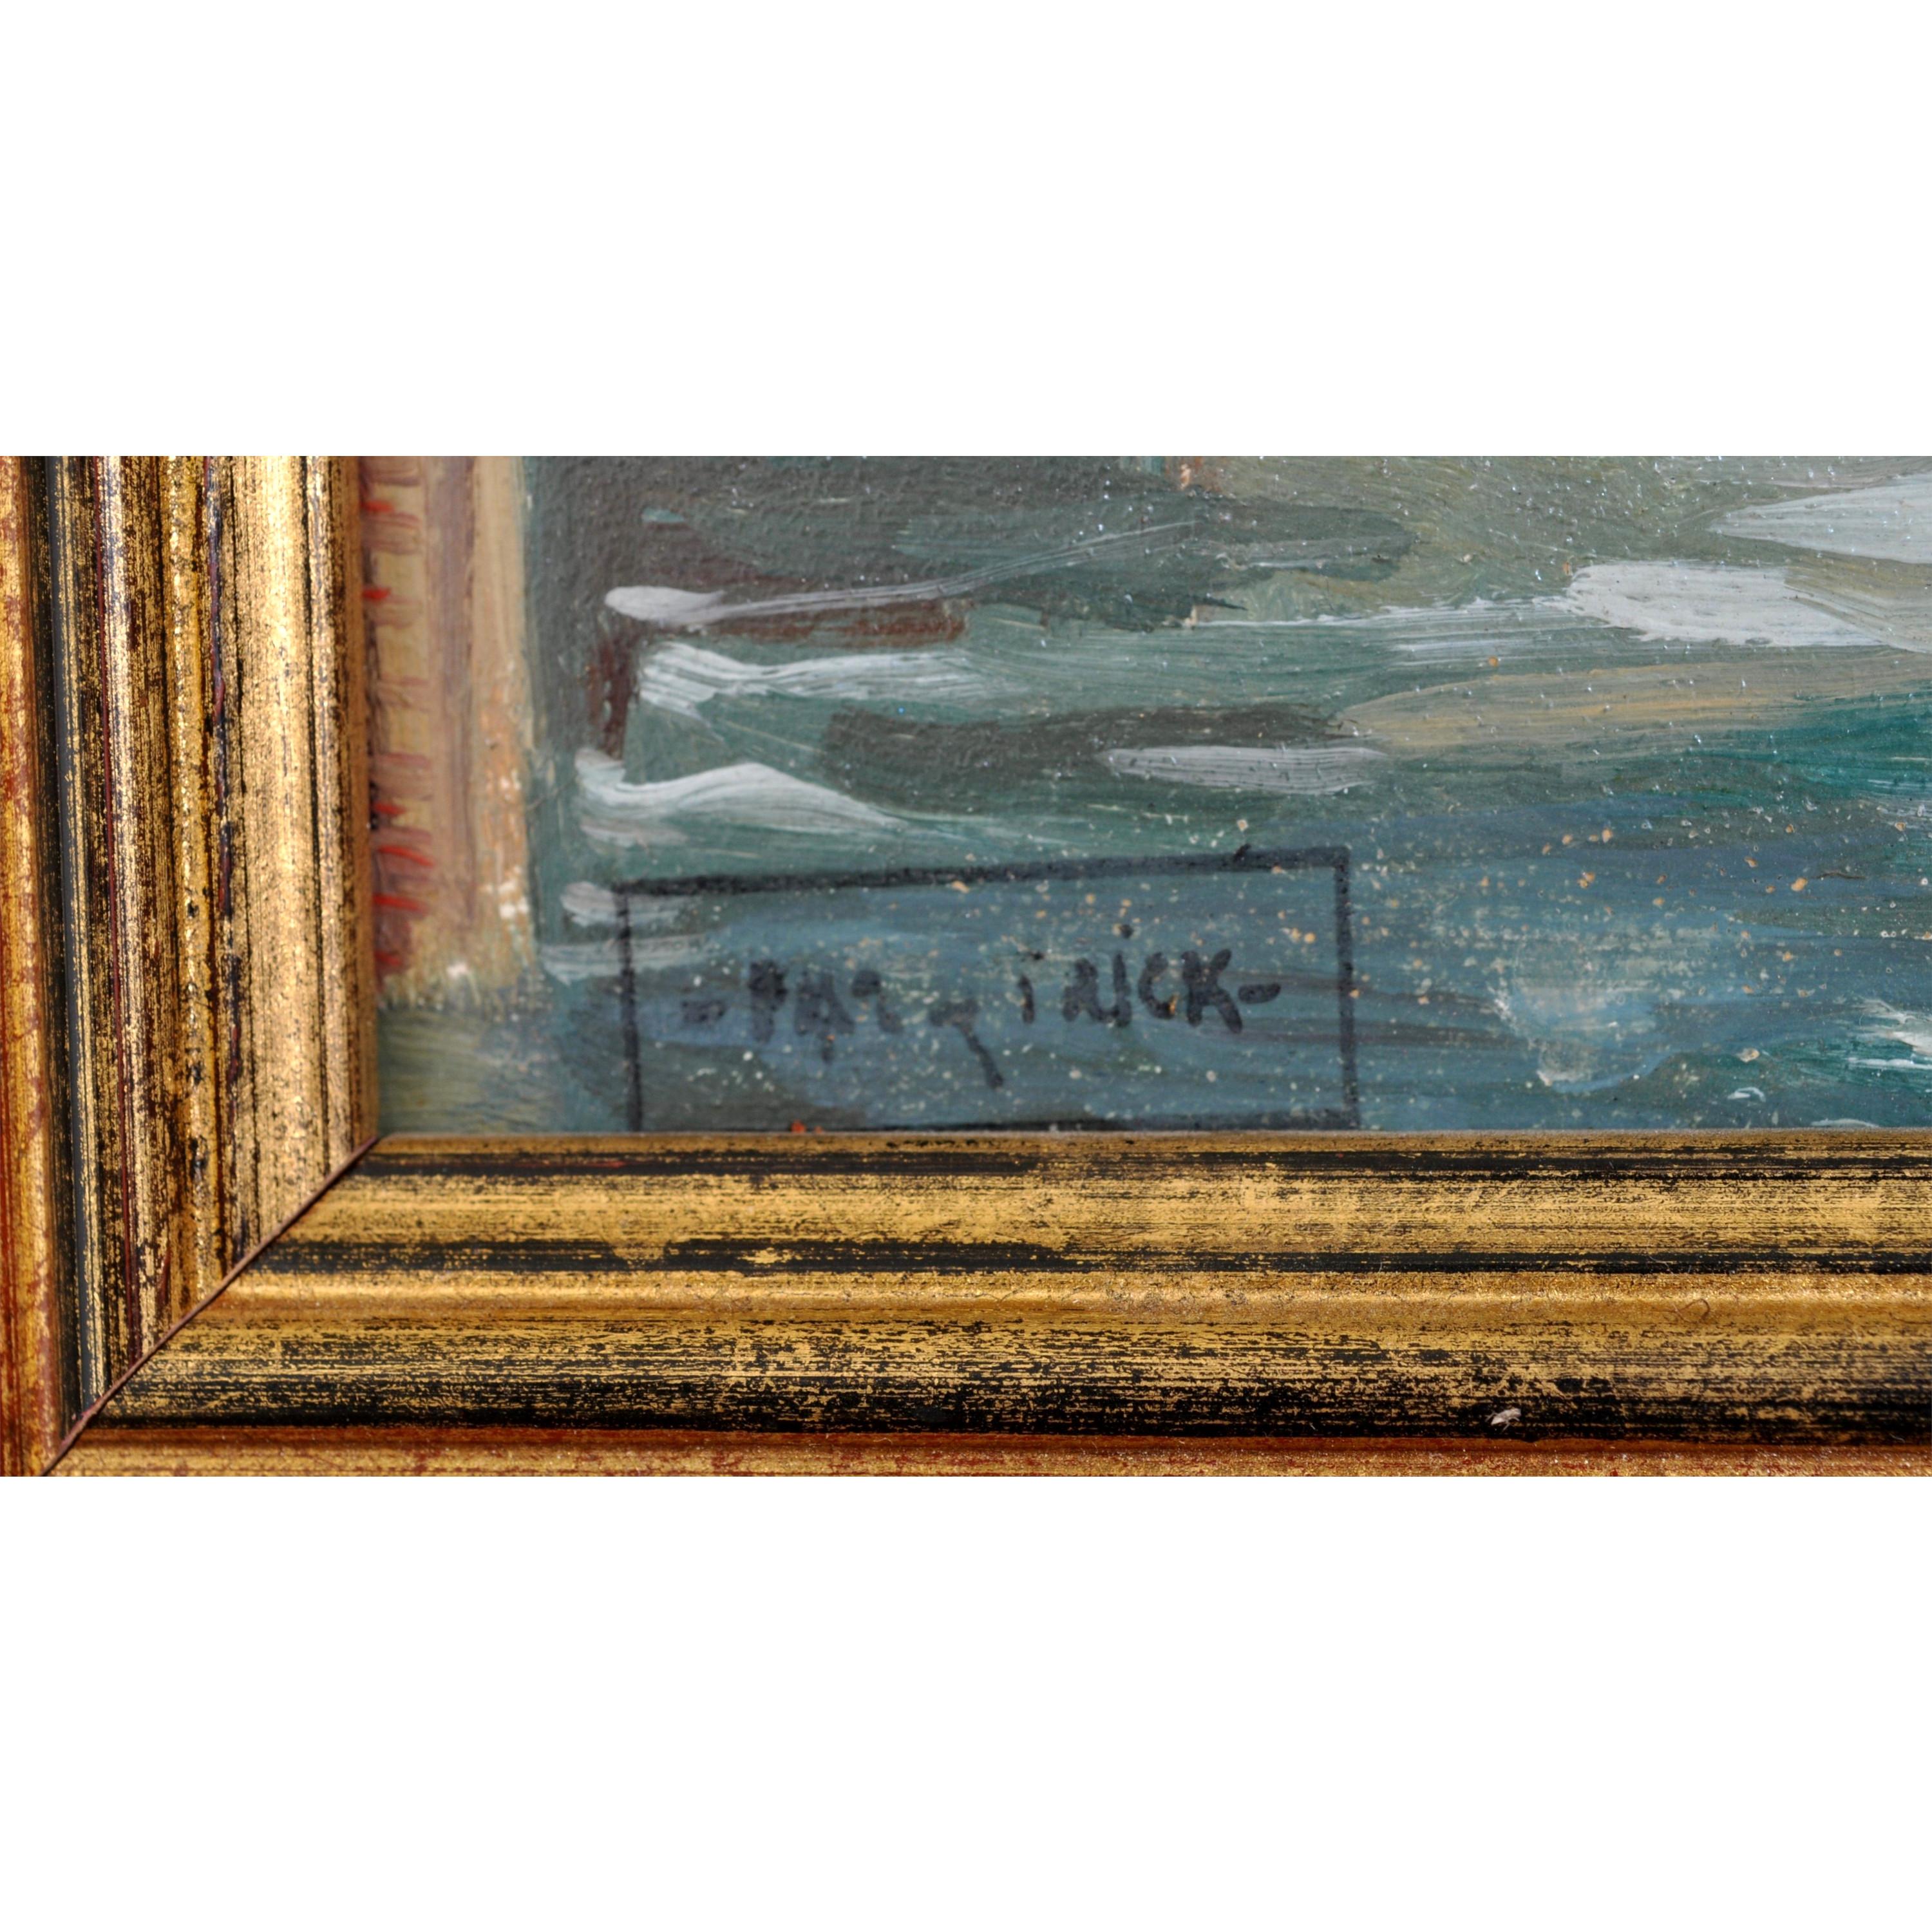 Antique French Impressionist Oil Painting Pont Neuf Paris by Paul de Frick 1900 For Sale 3